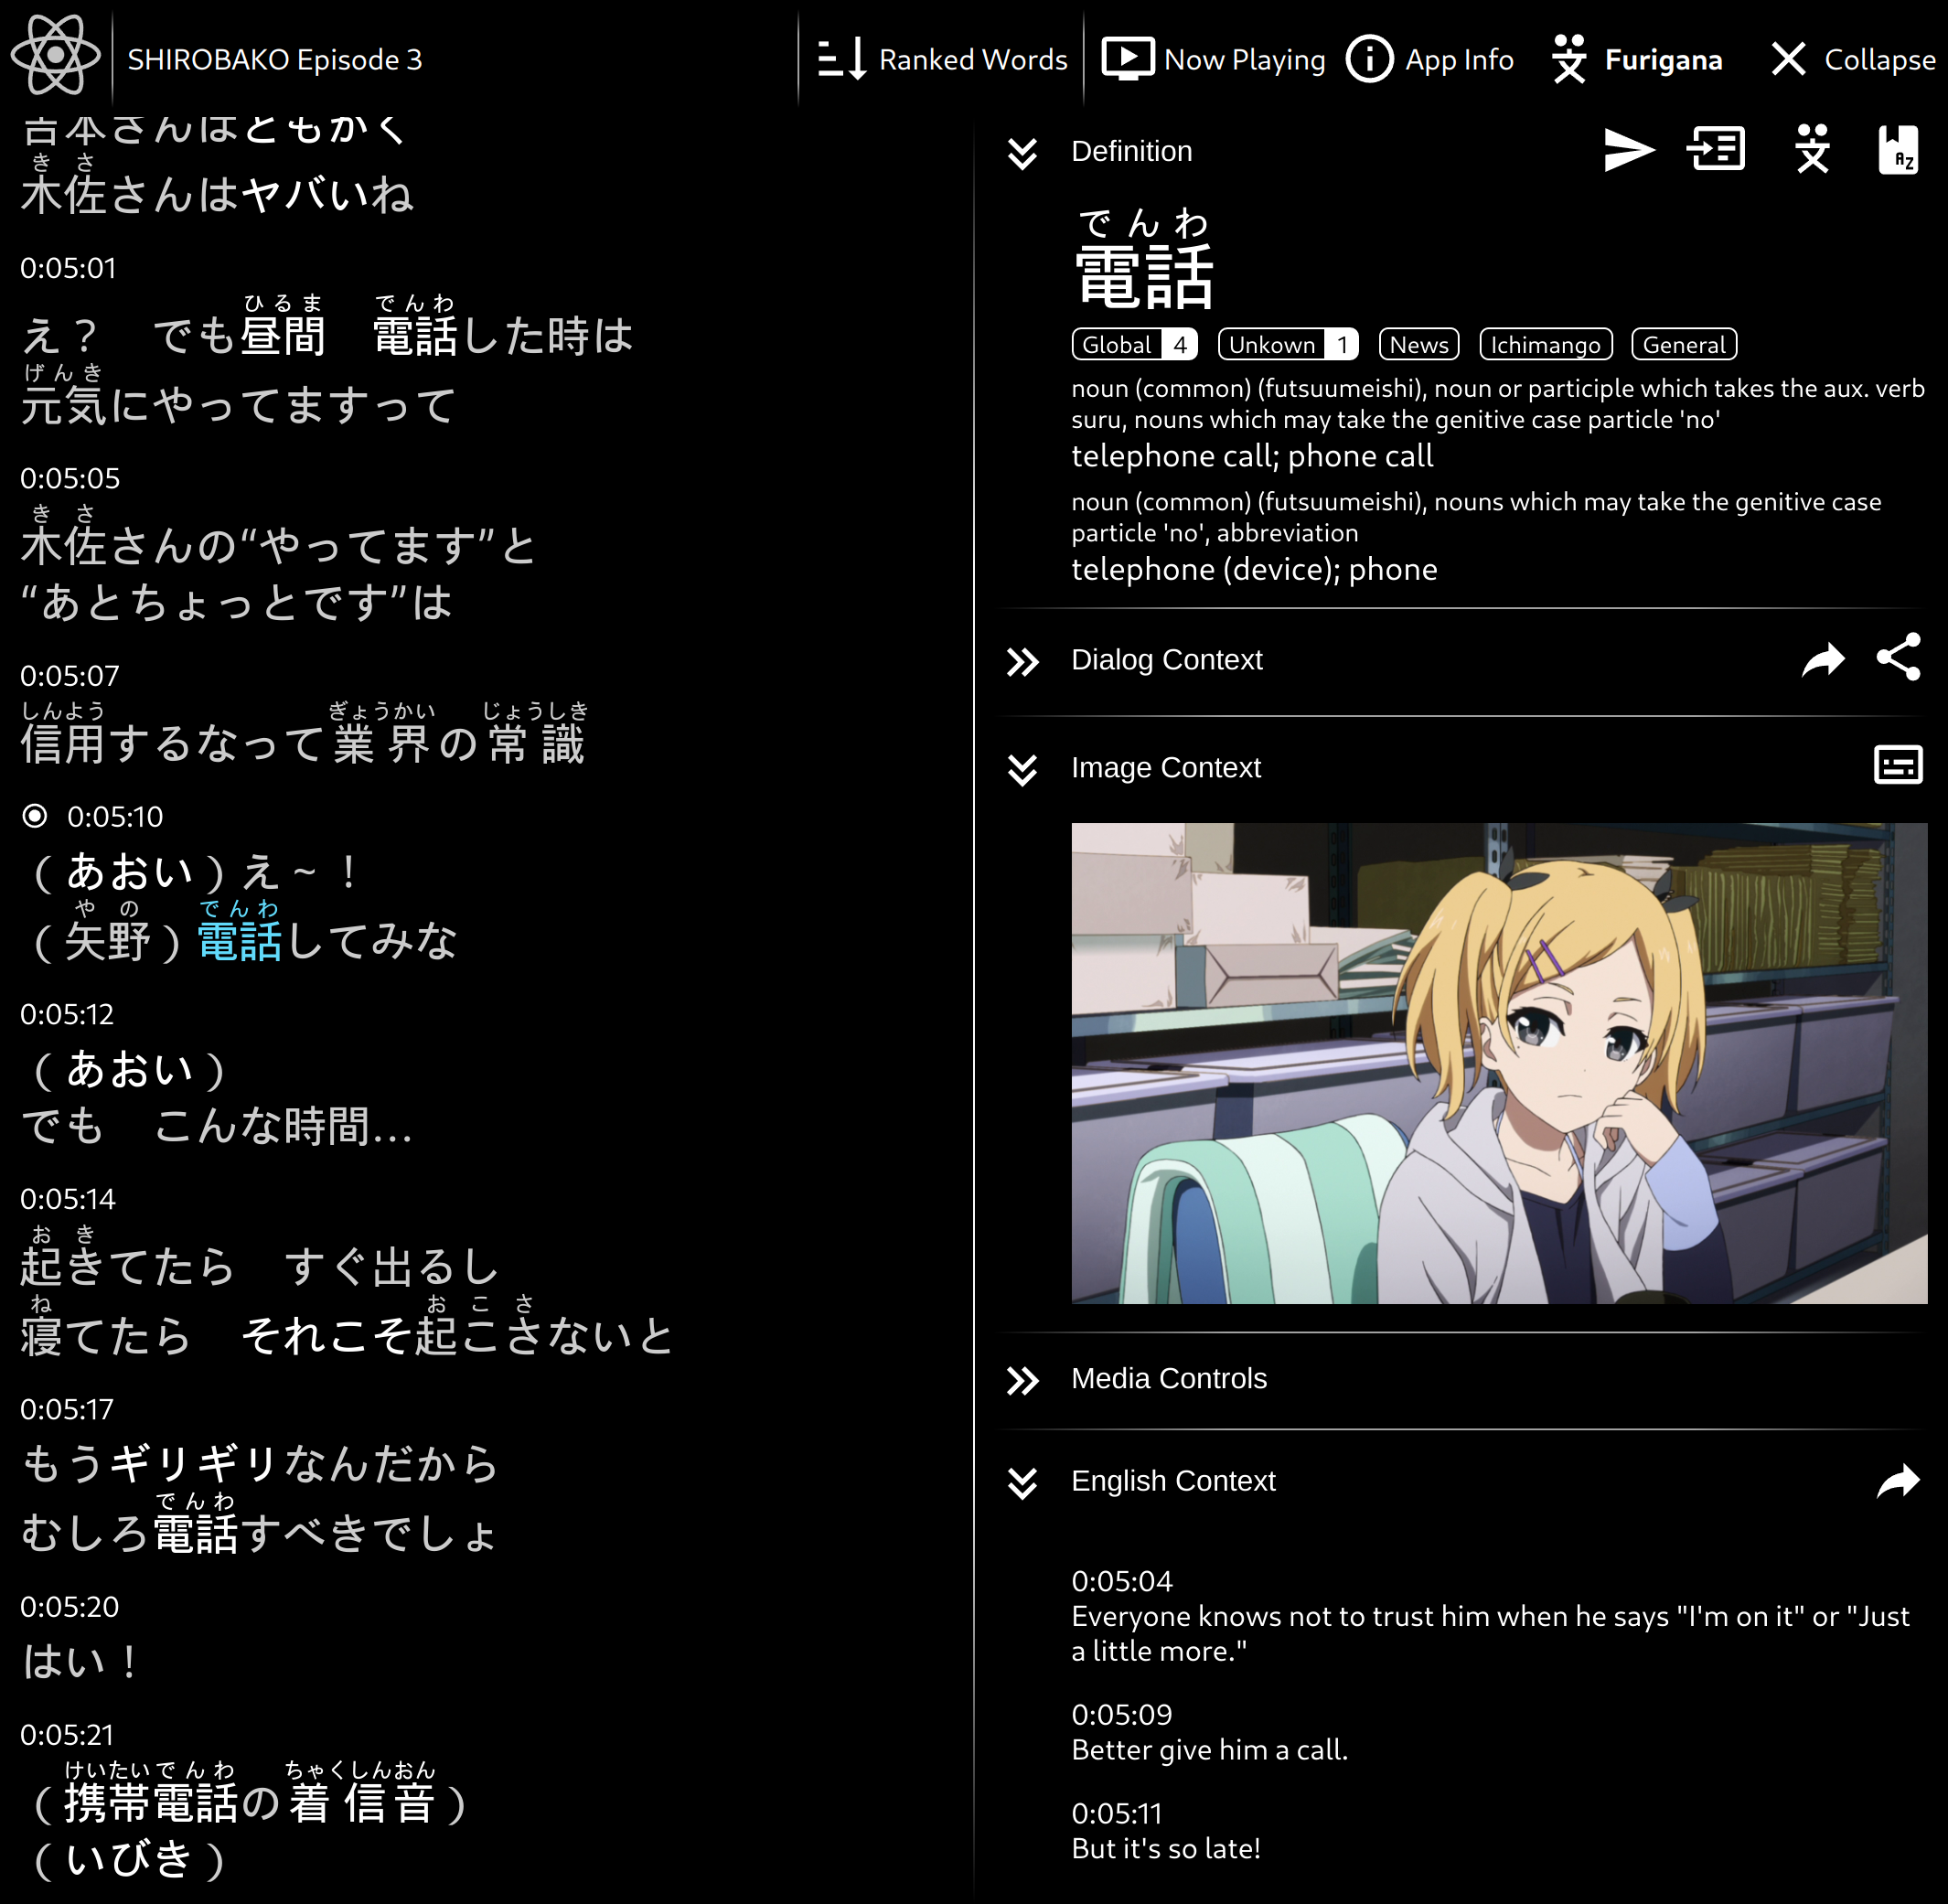 Screenshot 1, desktop layout